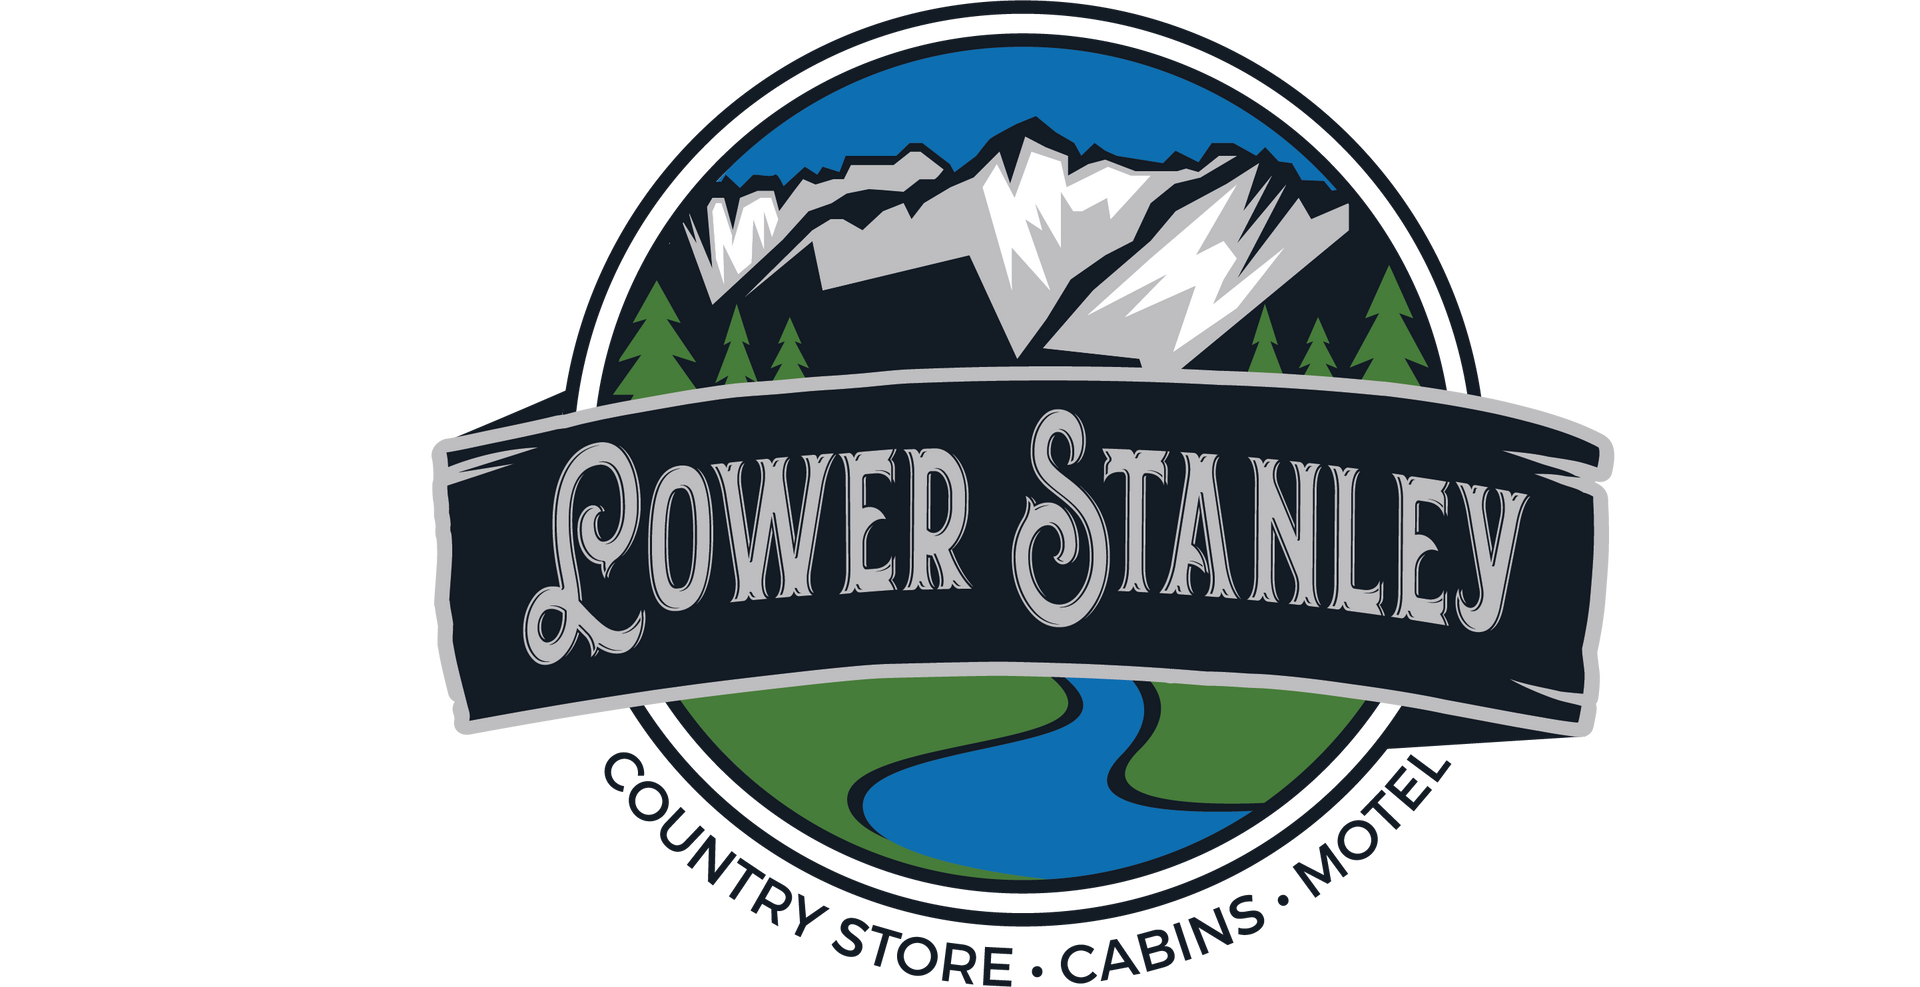 lower-Stanley-motel-cabins-logo